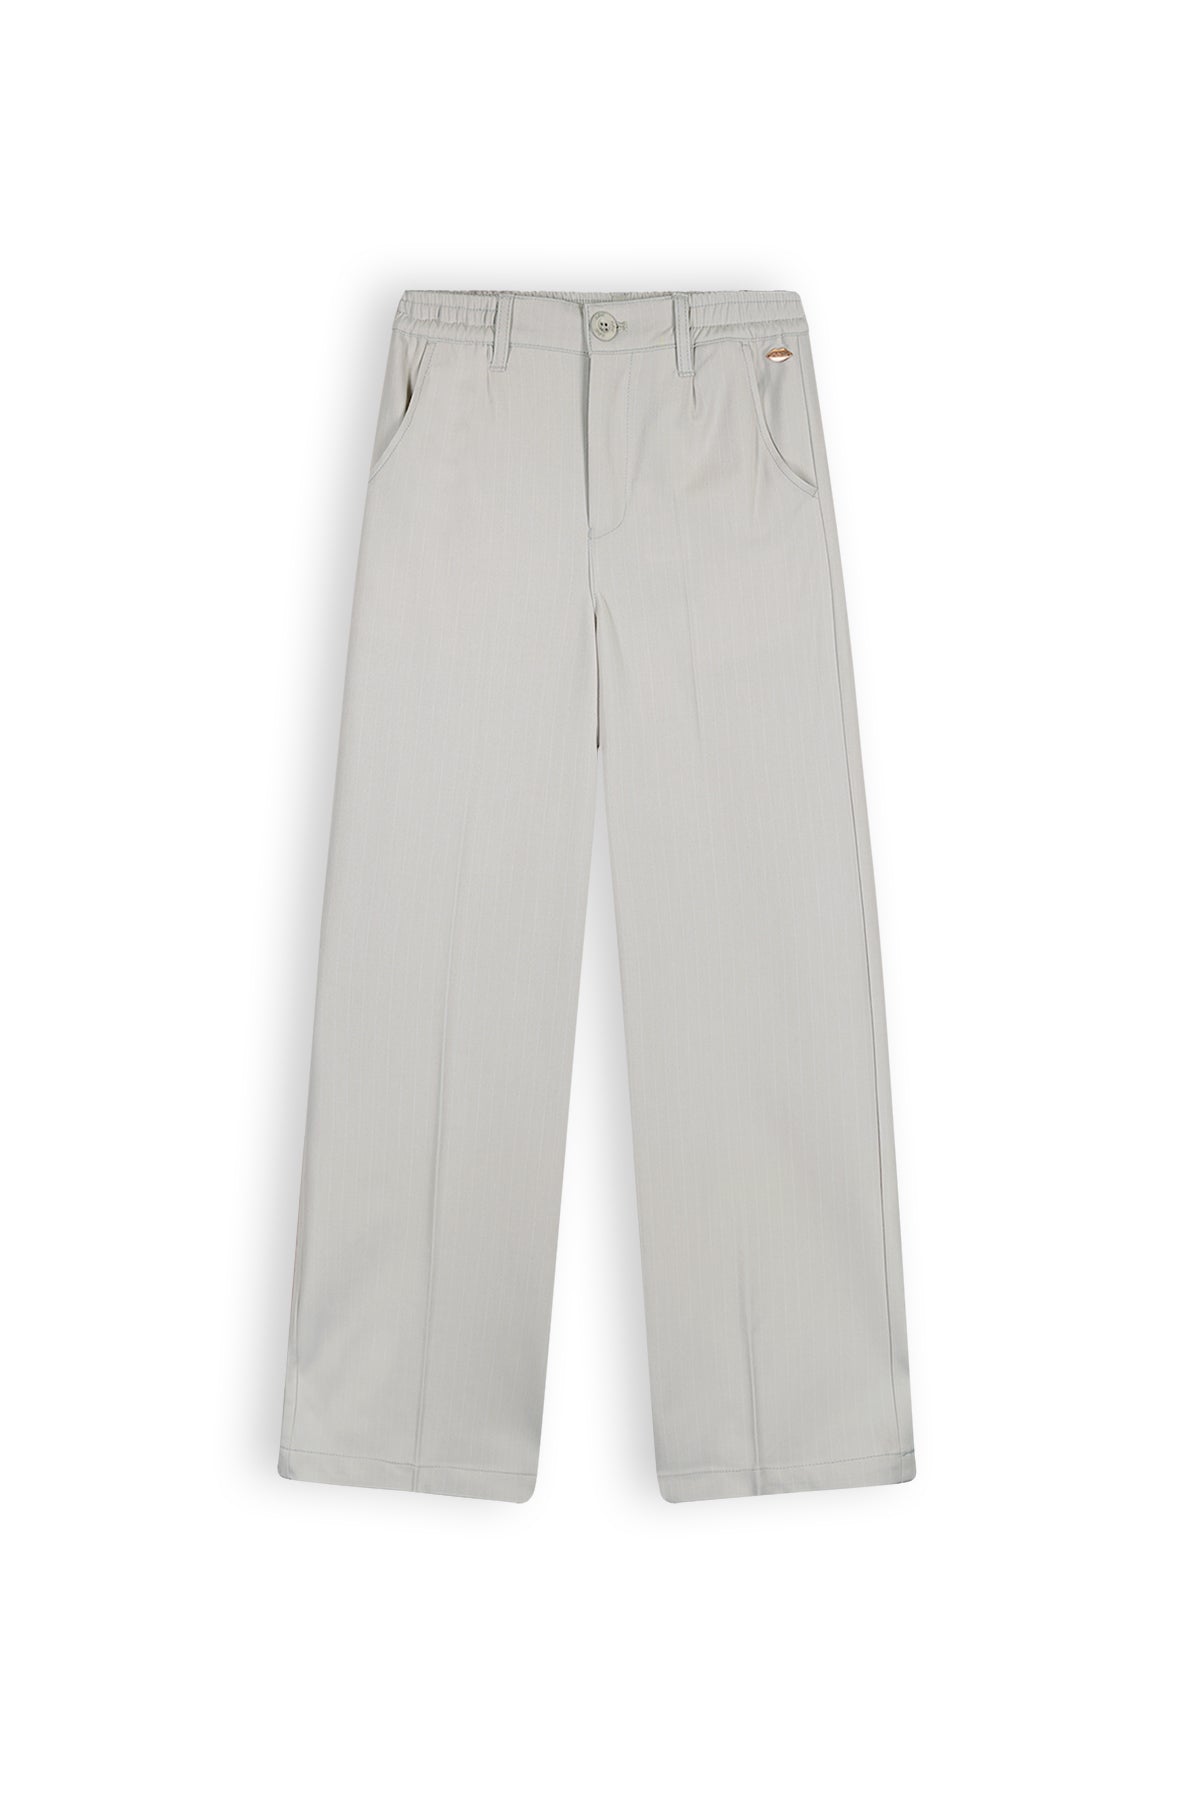 NoBell Sayla Girls Full Length Wide Pants Silver Grey